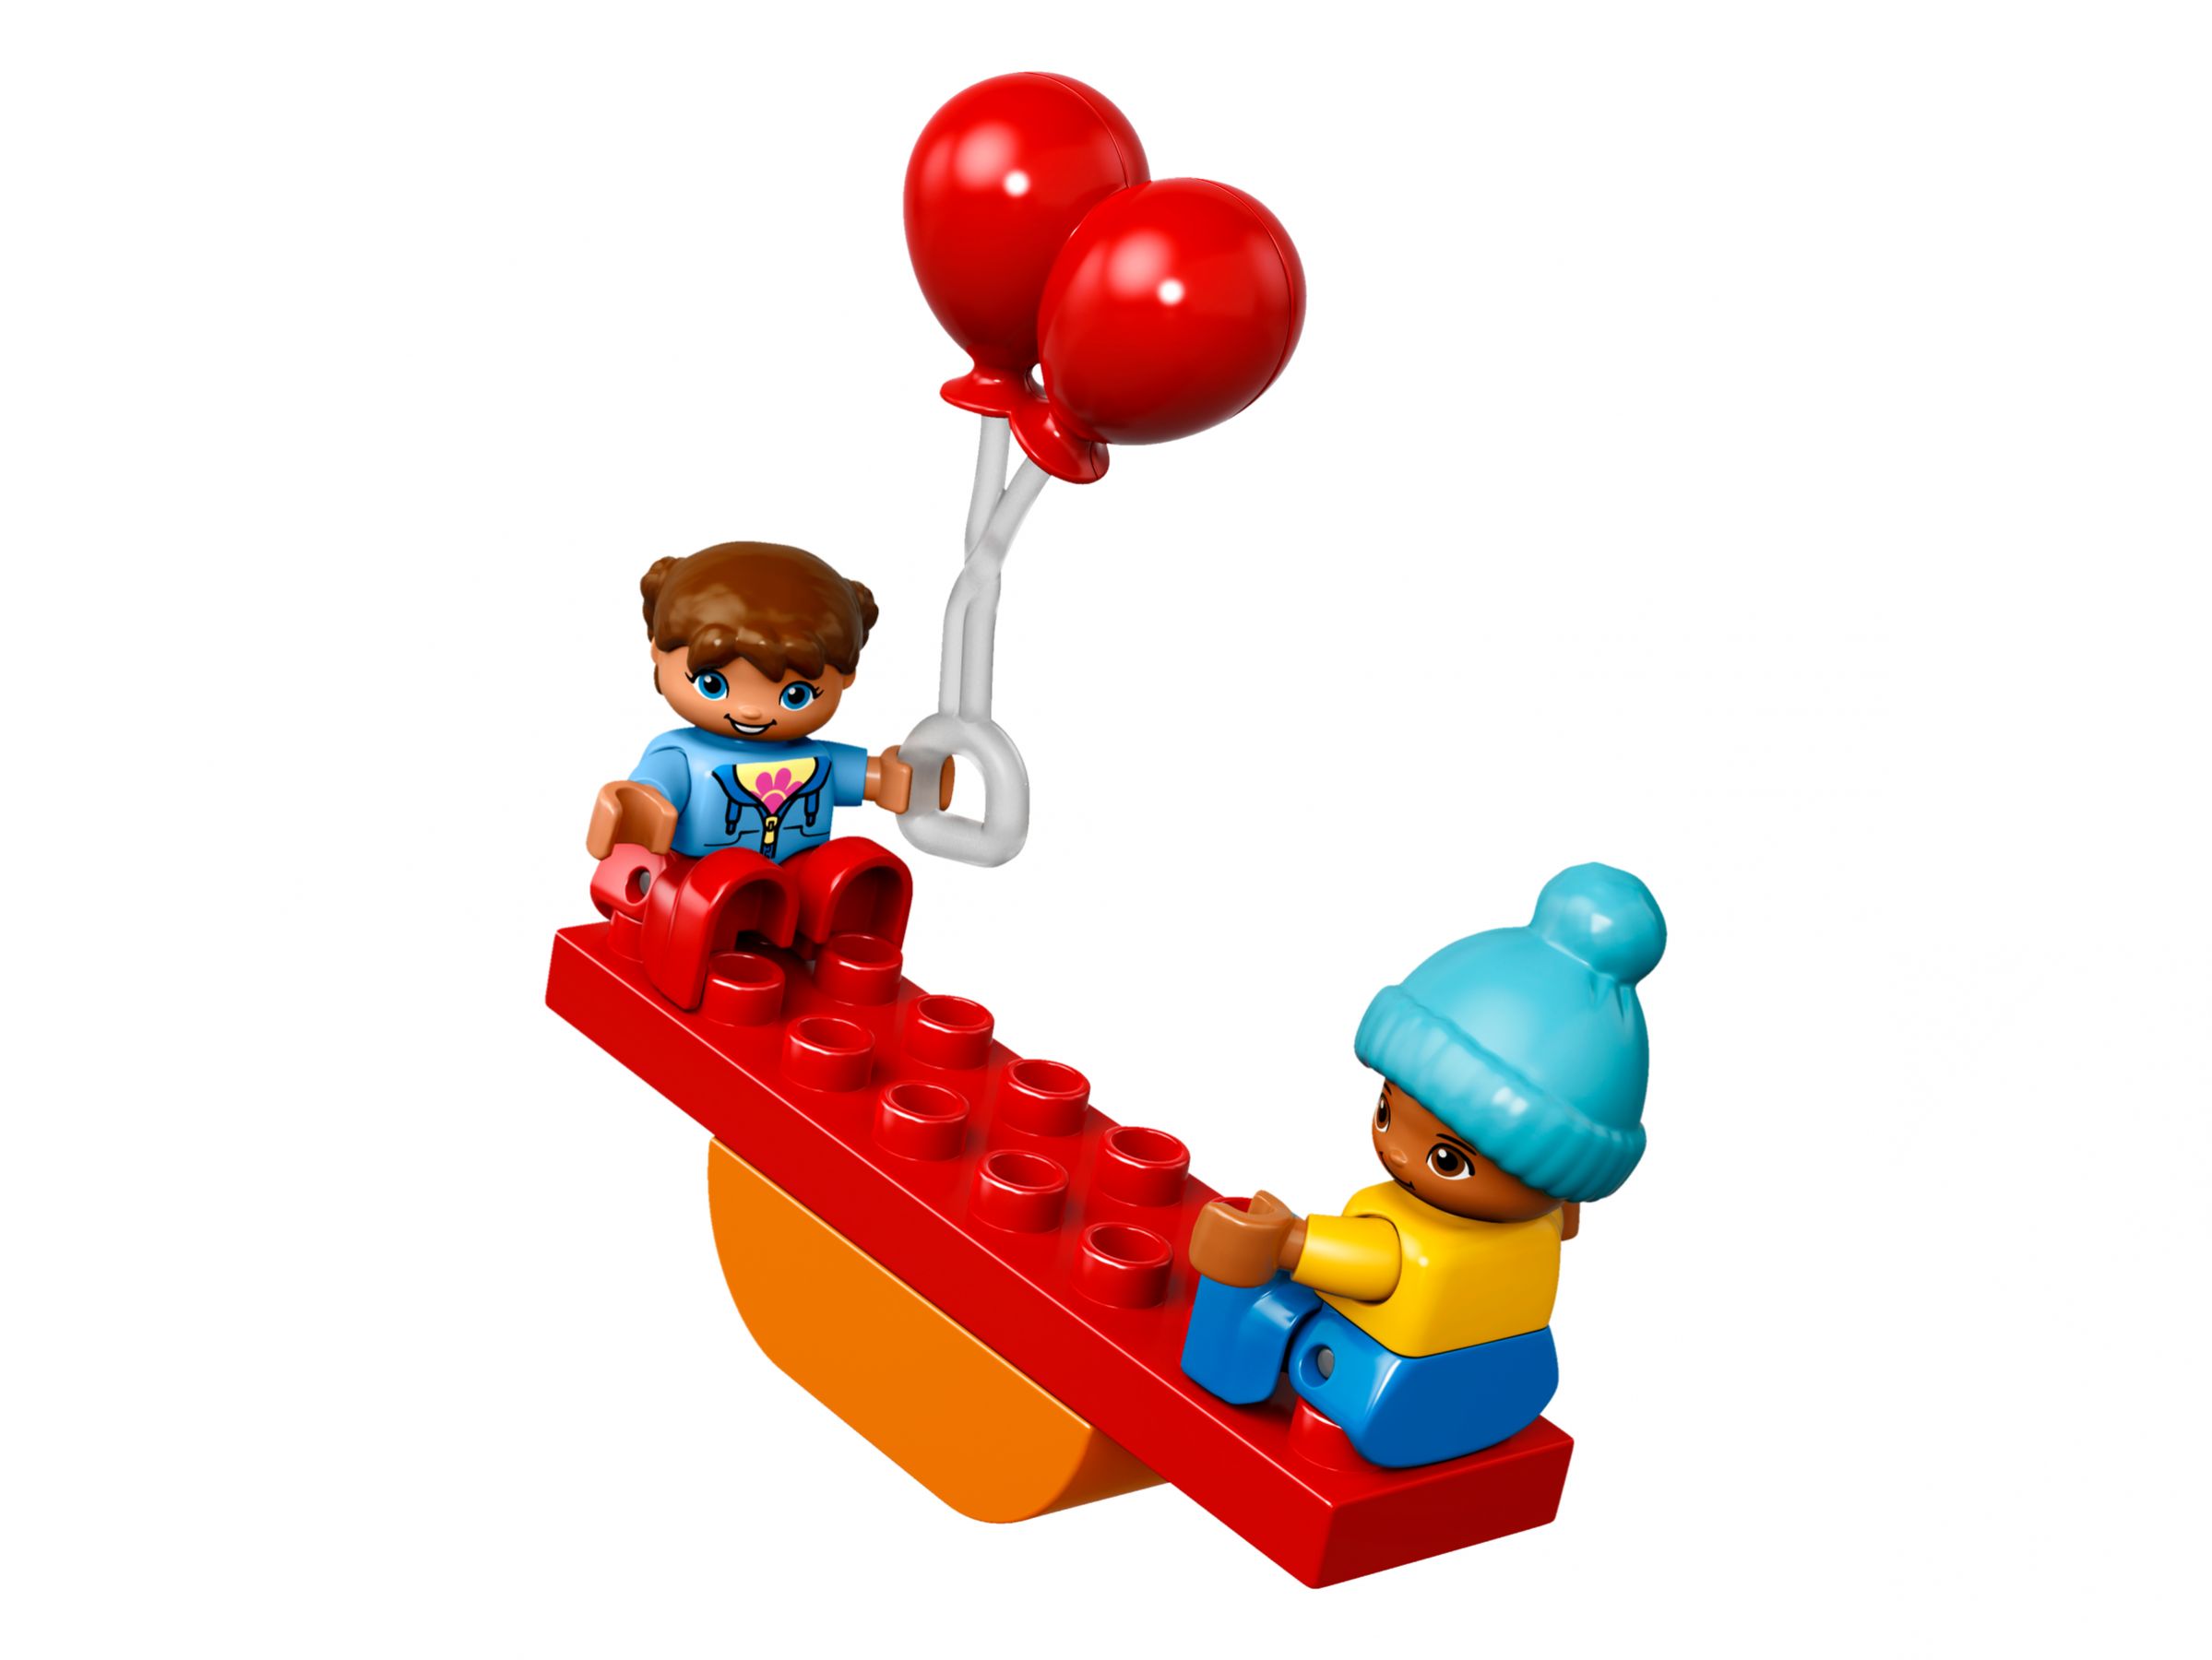 LEGO Duplo 10832 Geburtstagspicknick LEGO_10832_alt4.jpg